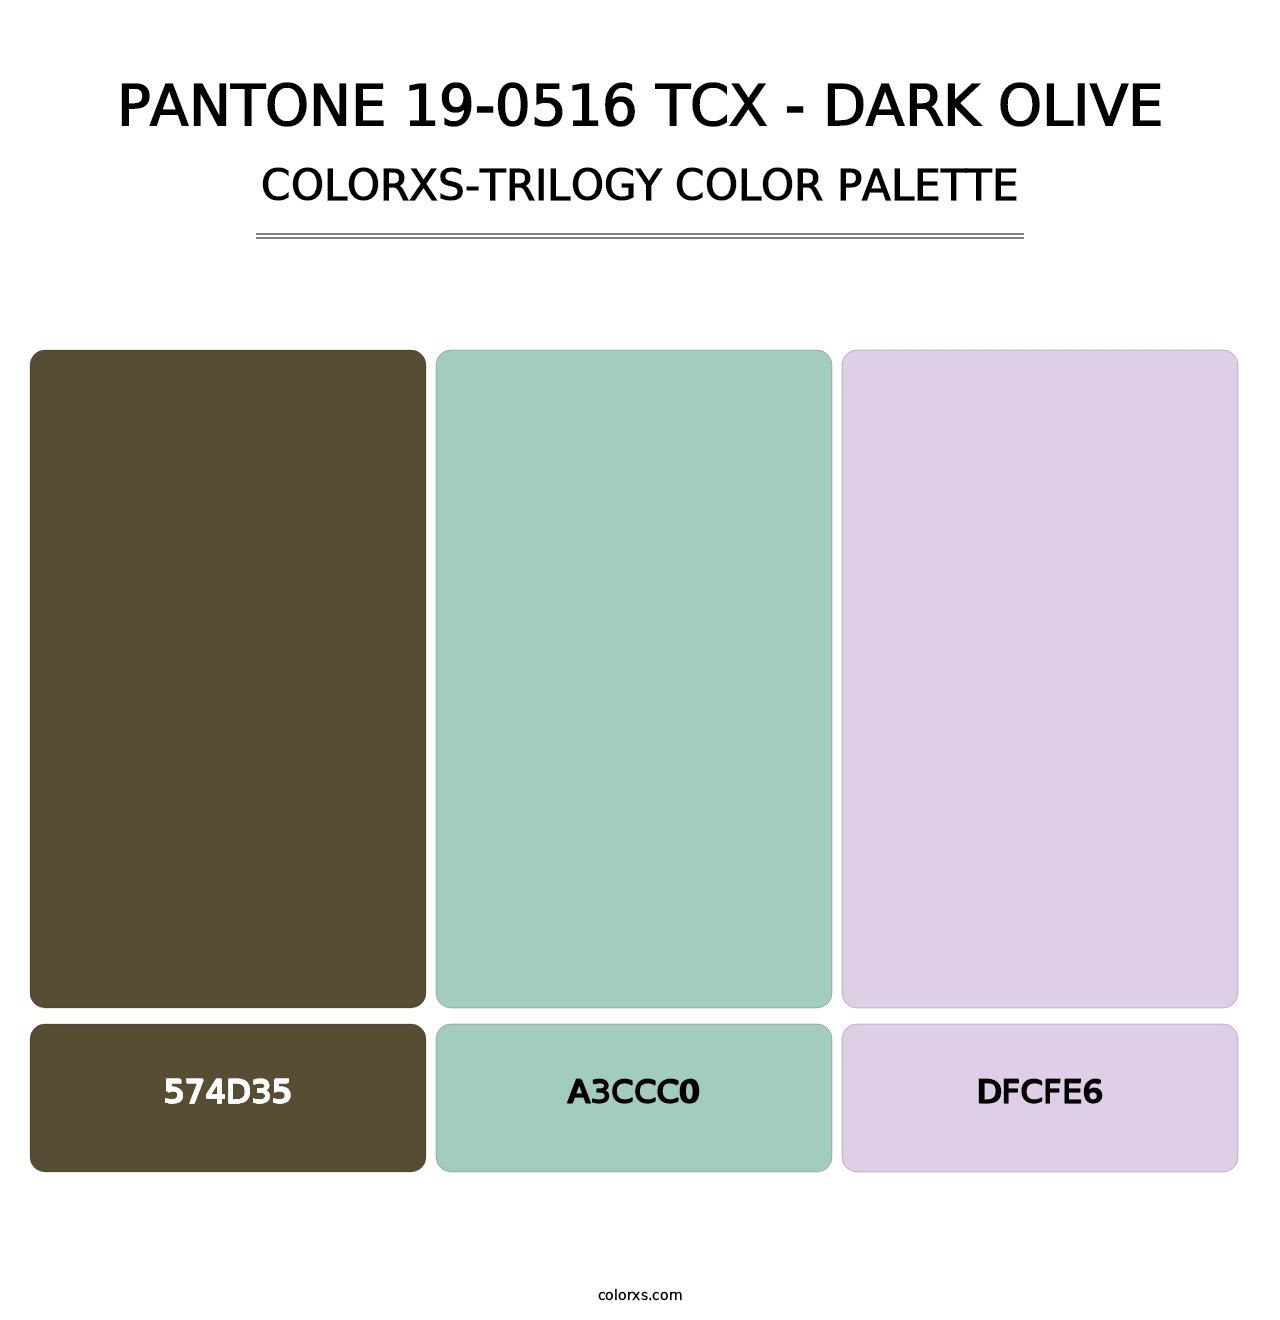 PANTONE 19-0516 TCX - Dark Olive - Colorxs Trilogy Palette